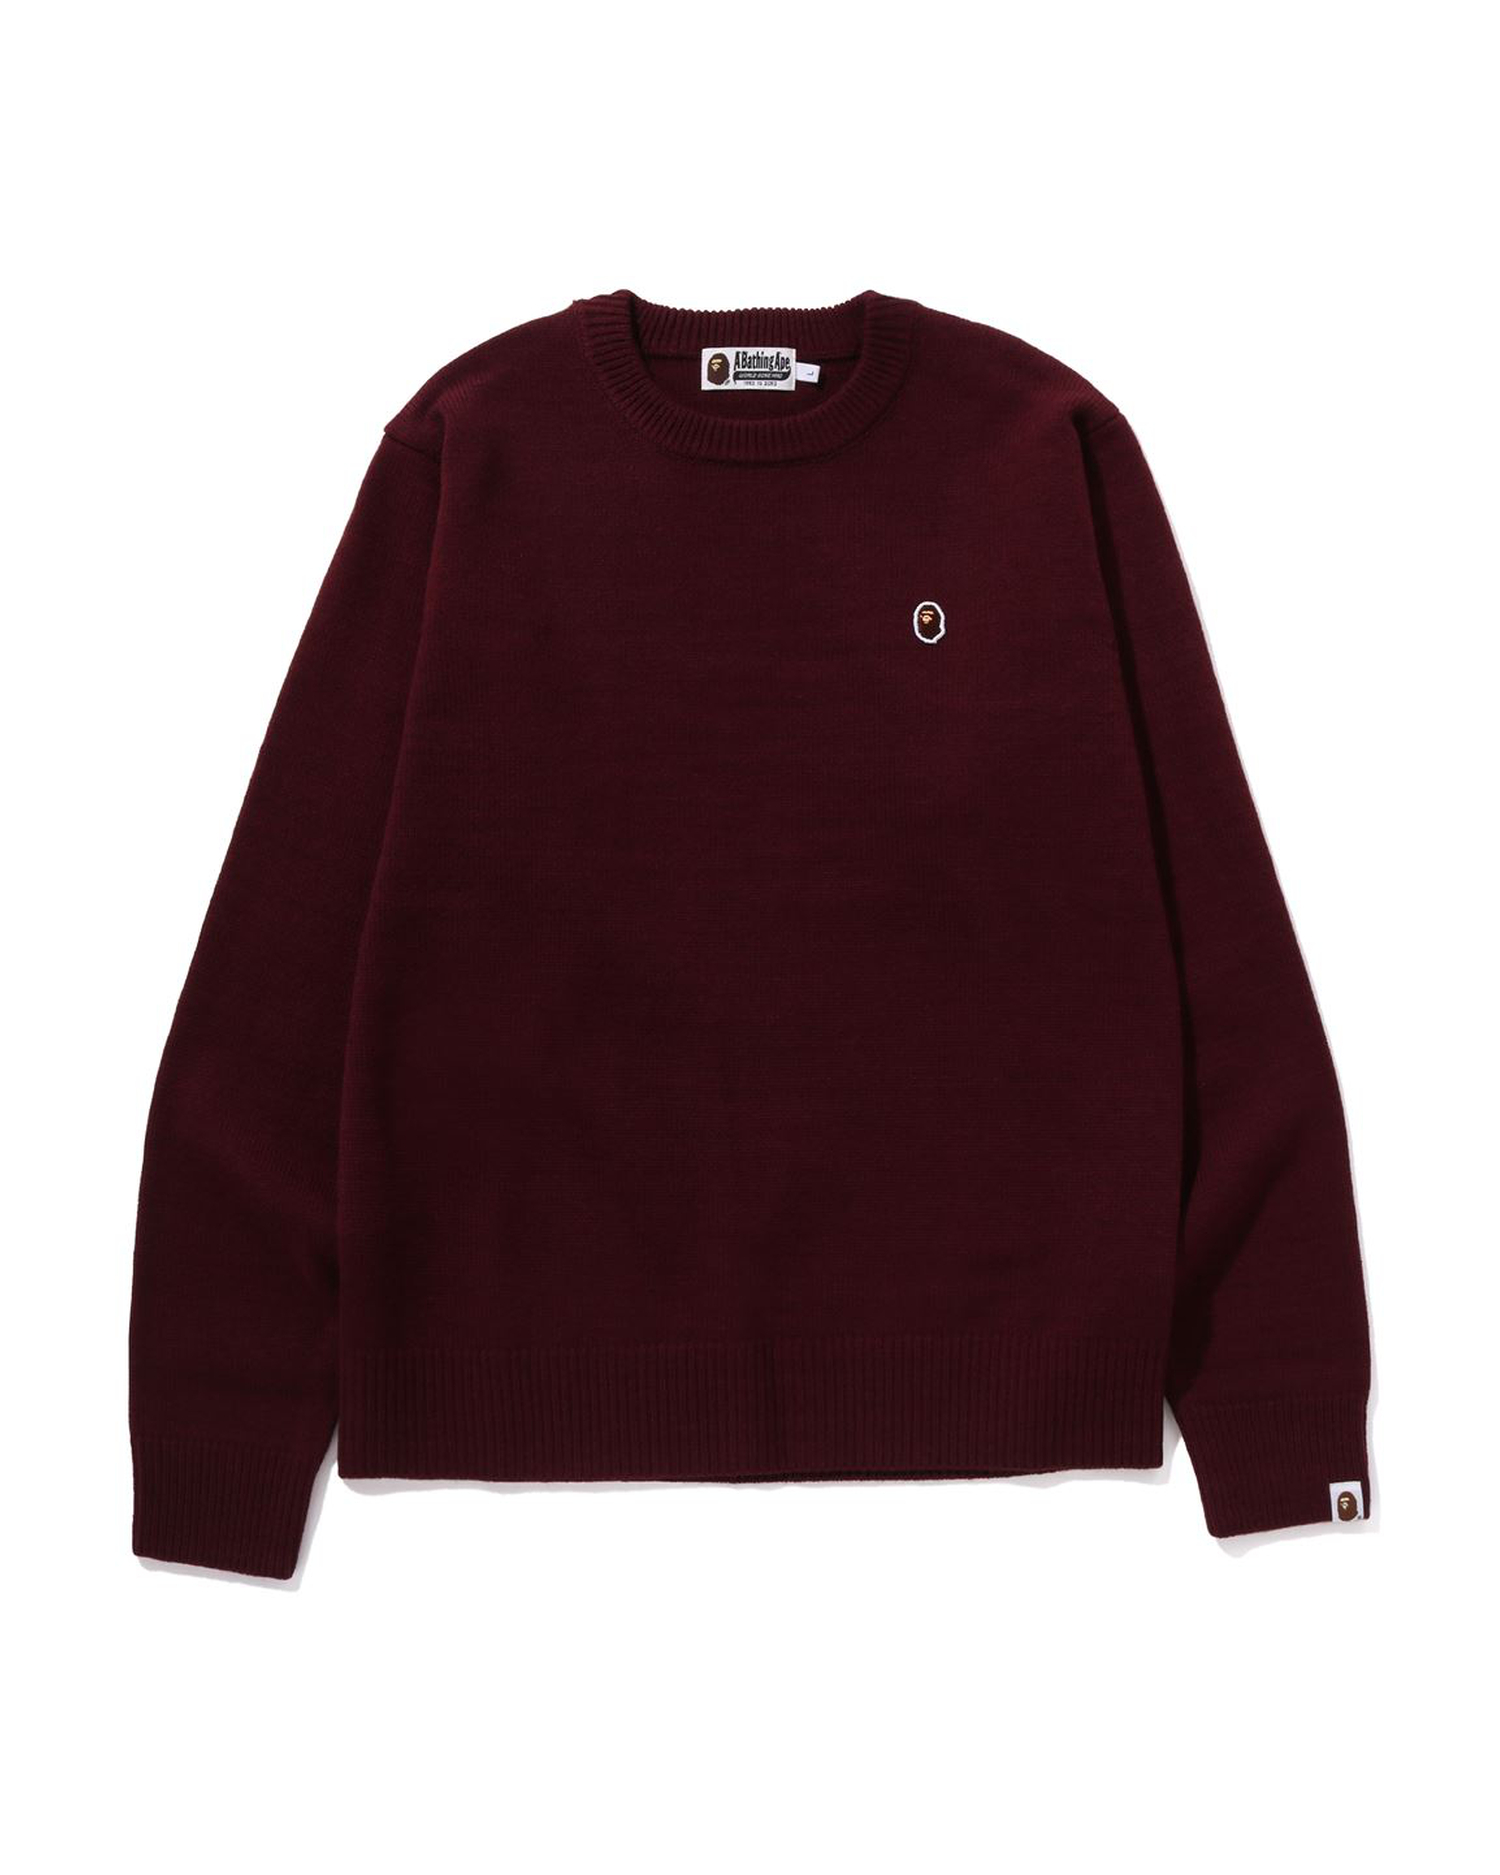 Shop Ape Head One Point Knit Sweater Online | BAPE